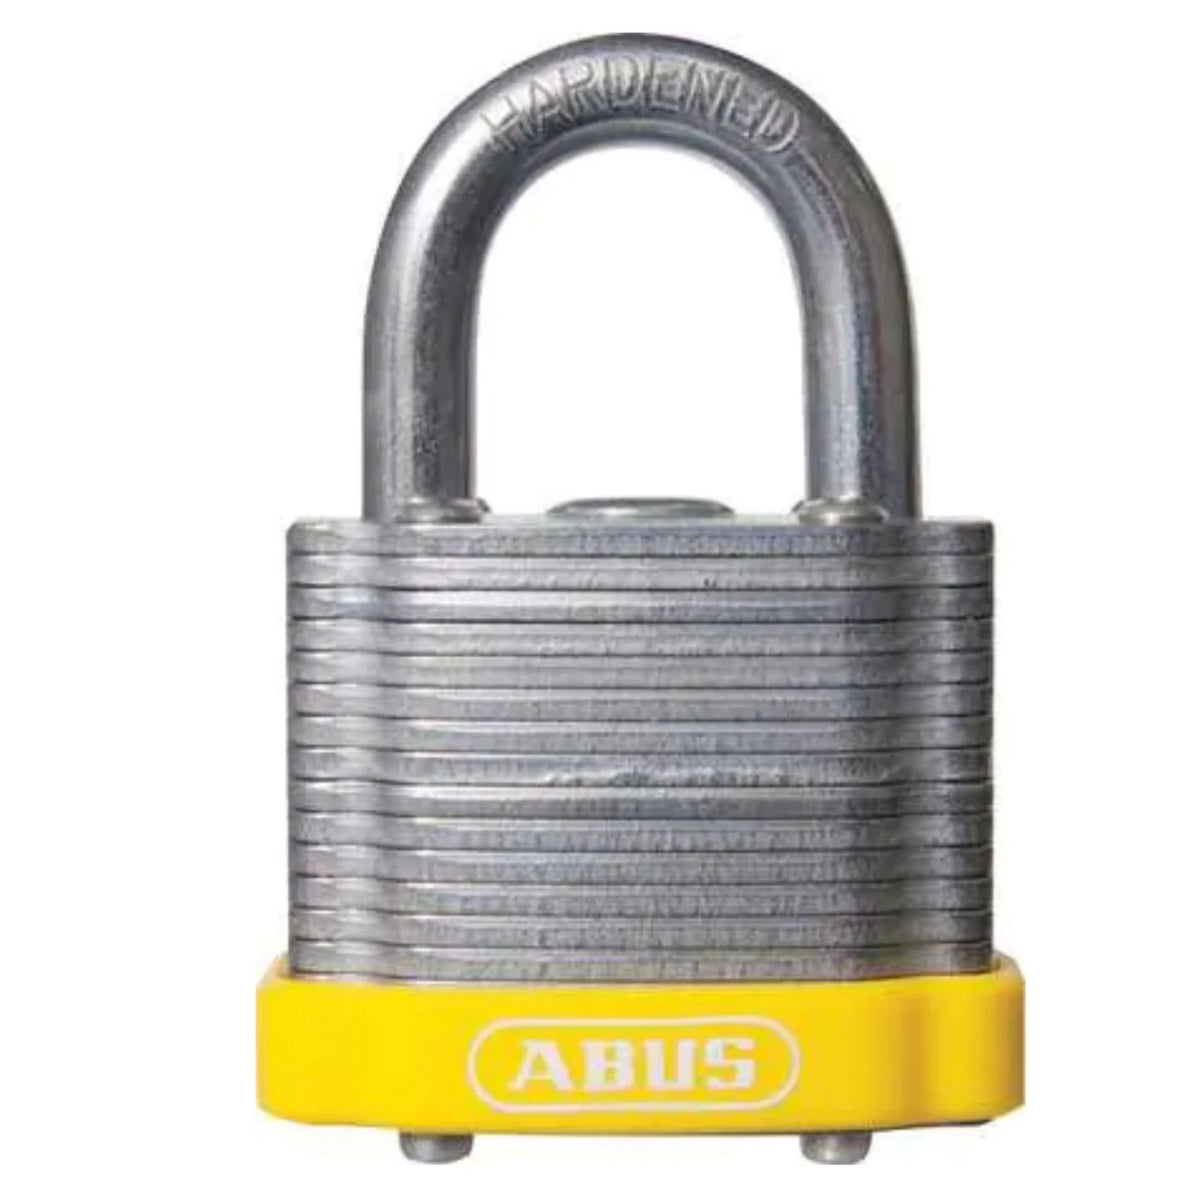 Abus 41/40 Yellow Lock Laminated Steel Padlocks Keyed Alike (4140 KA), KD or MK Locks - The Lock Source